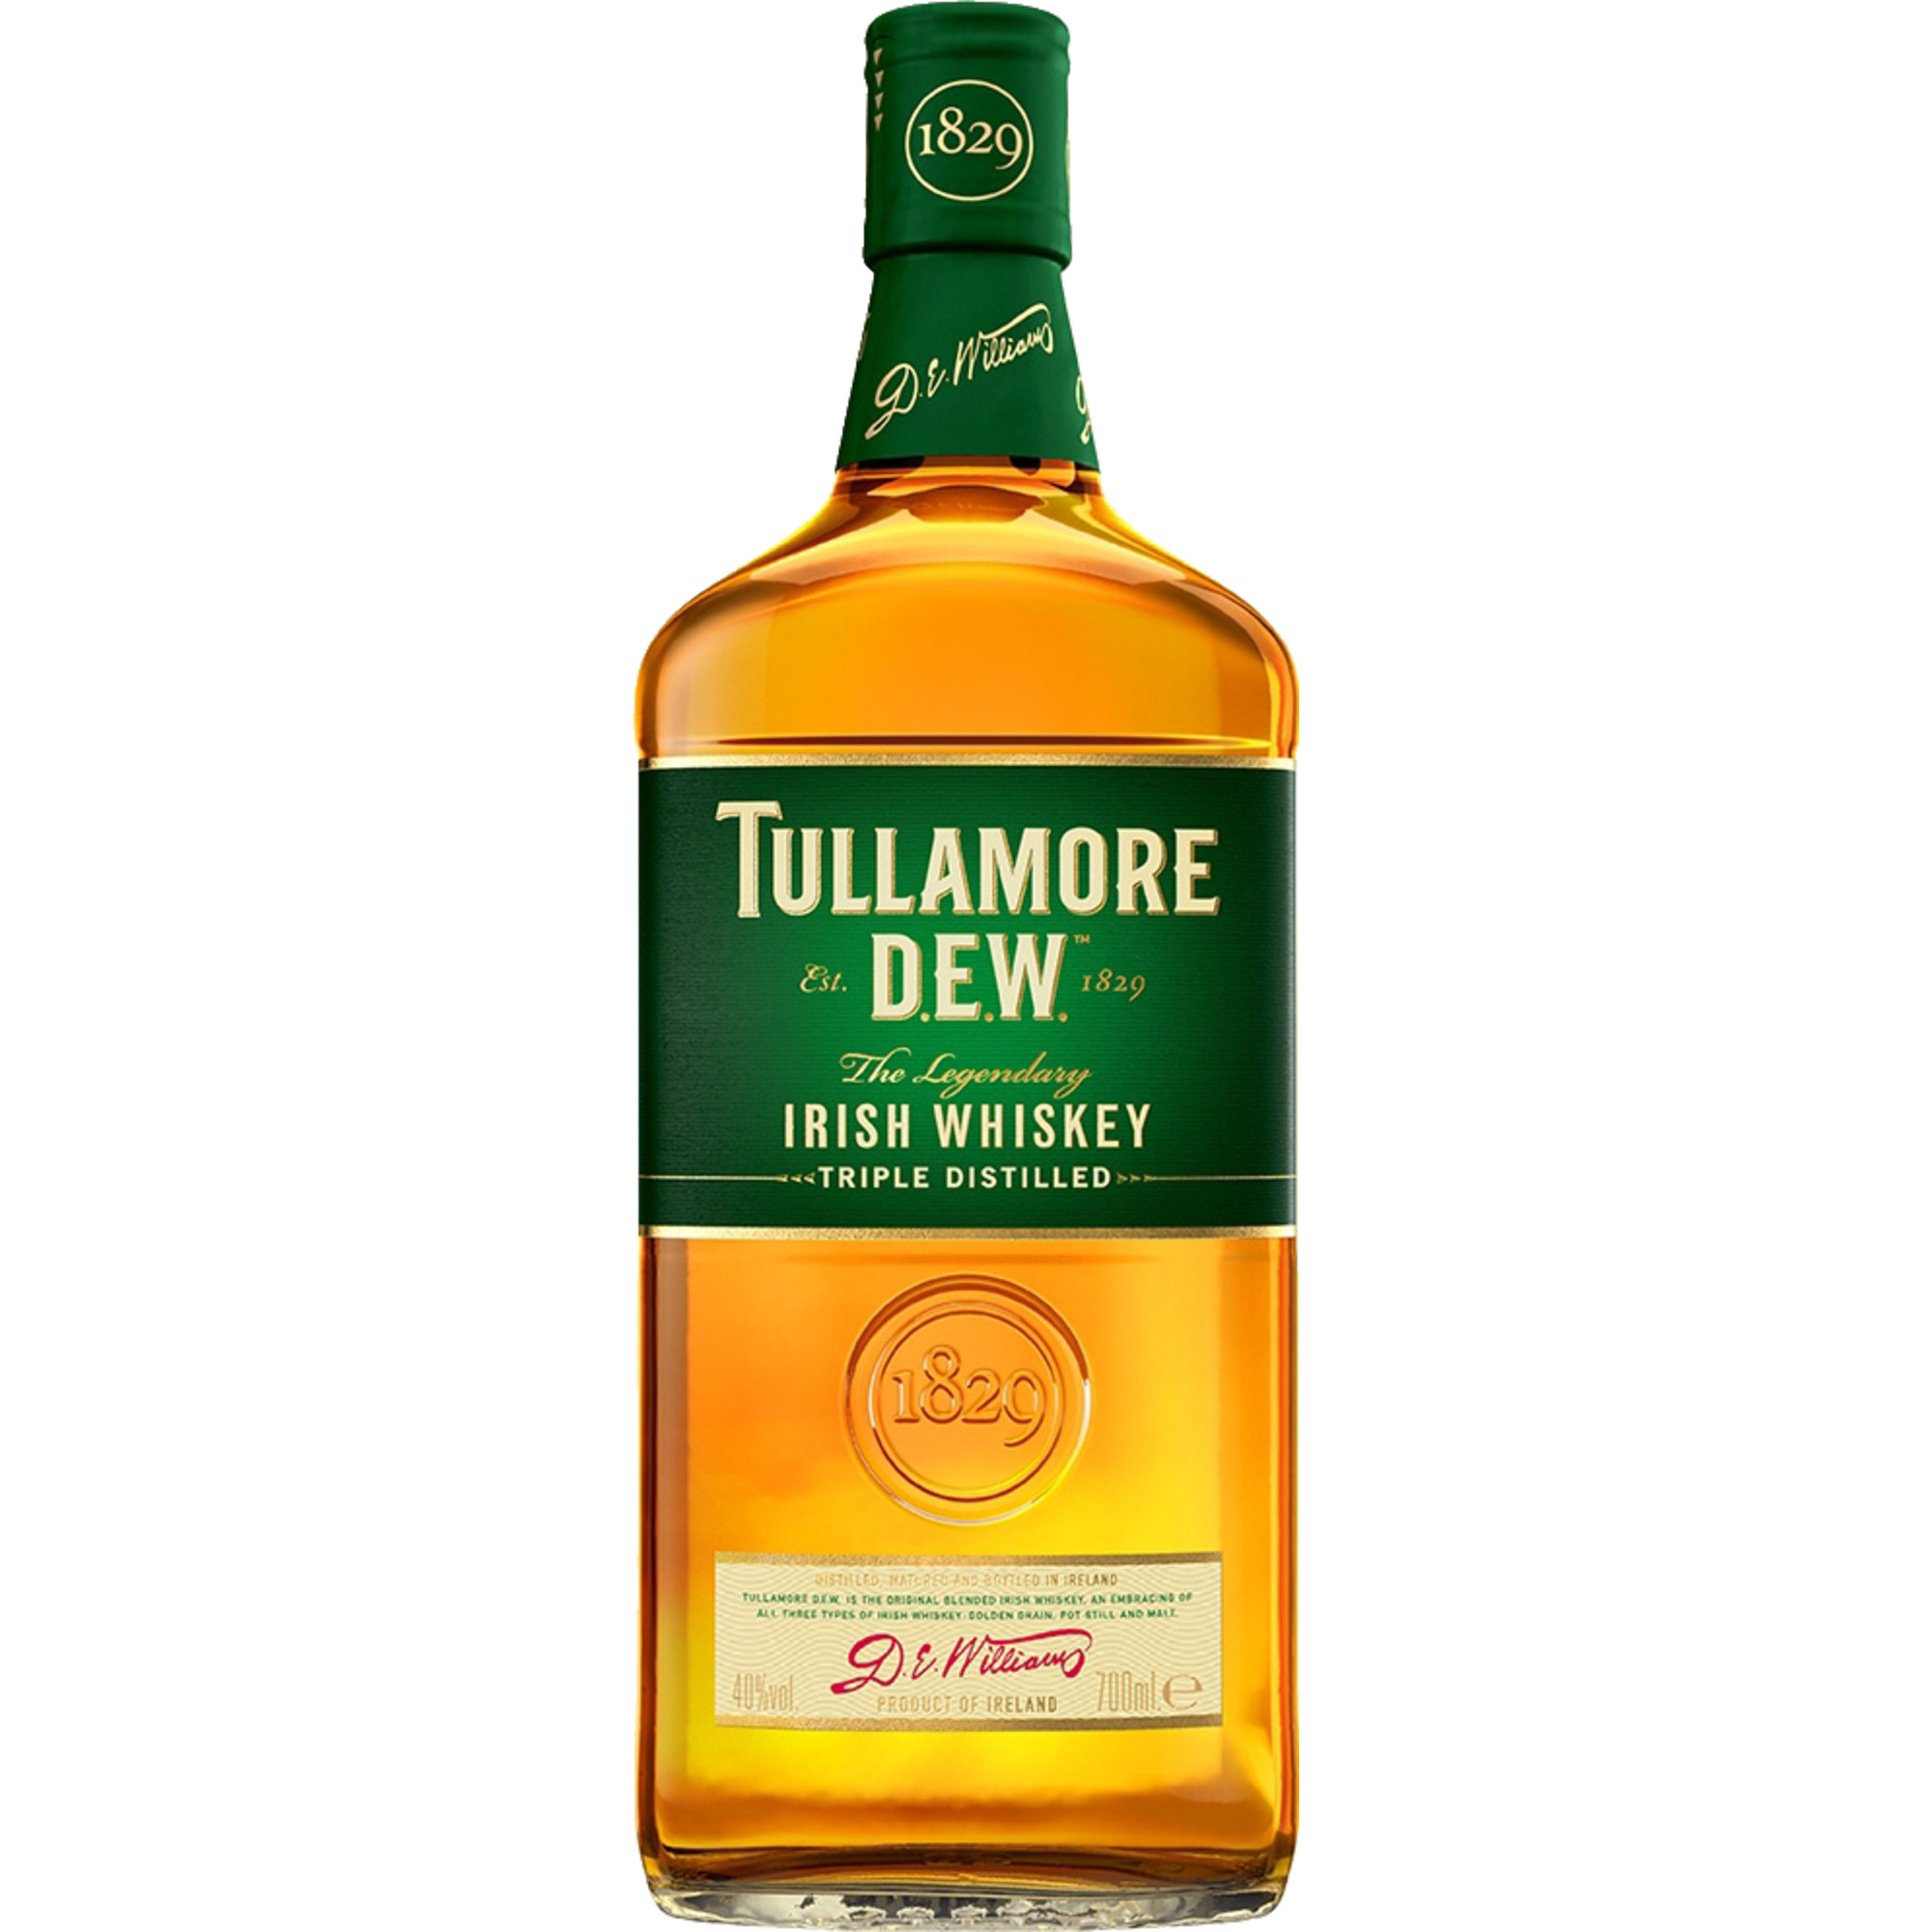 Tullamore Dew Irish Whisky, 0,7 L, 40% Vol., Spirituosen William Grant & Sons Global Brands Ltd., Tullamore, Ireland Hawesko DE